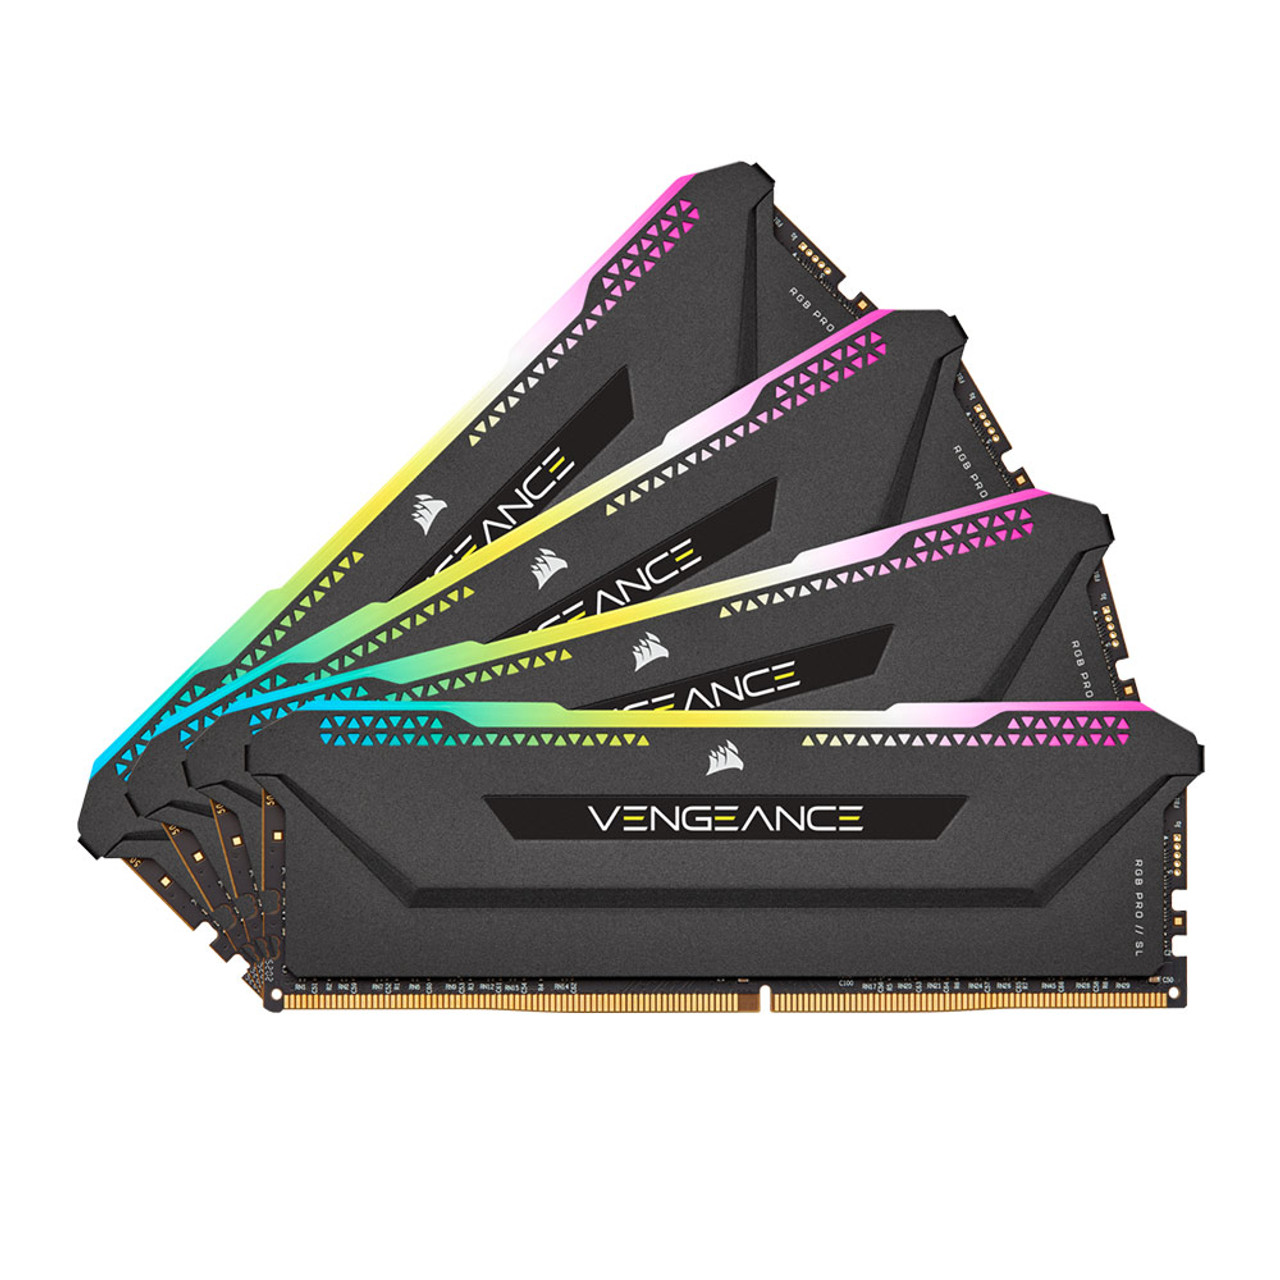 CORSAIR VENGEANCE RGB PRO 16GB (2x8GB) DDR4 3600MHz C18 LED Desktop Memory  - Black